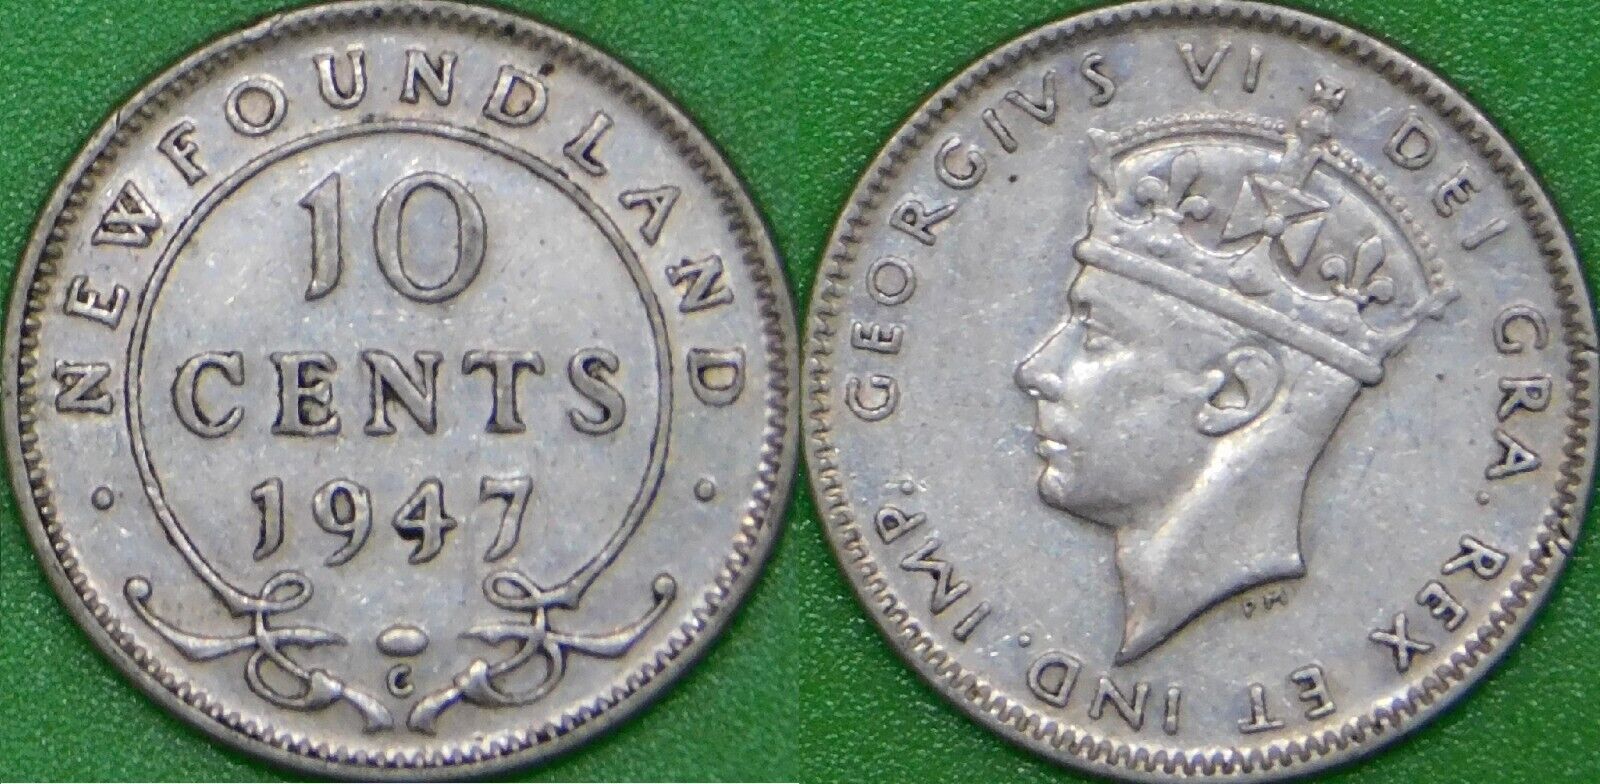 1947 Canada (c Mark) Silver Newfoundland Dime Graded As Very Fine